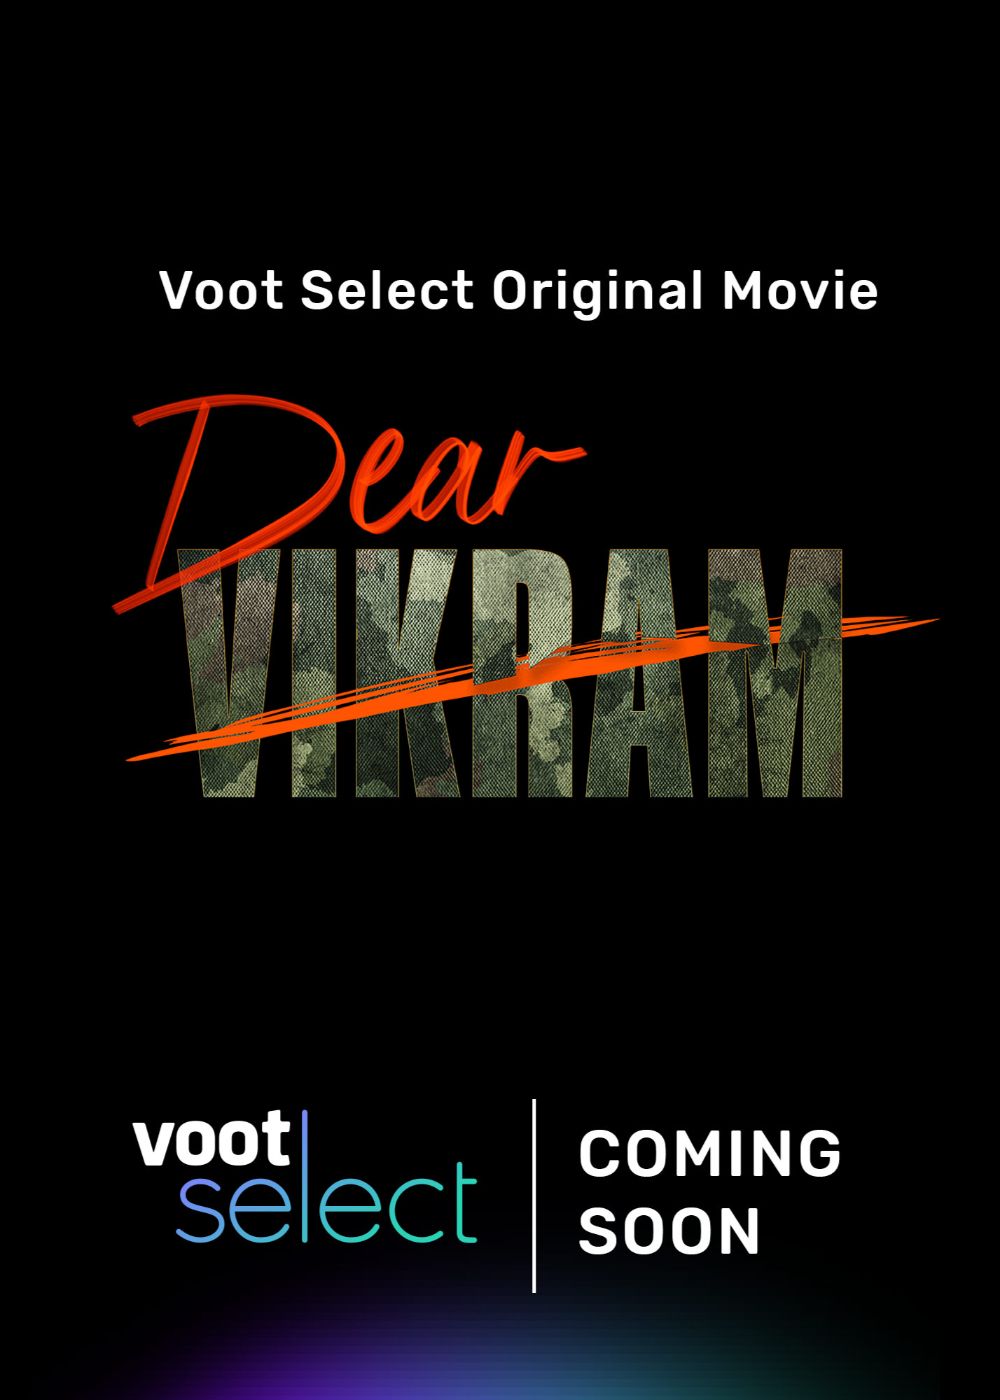 Dear Vikram